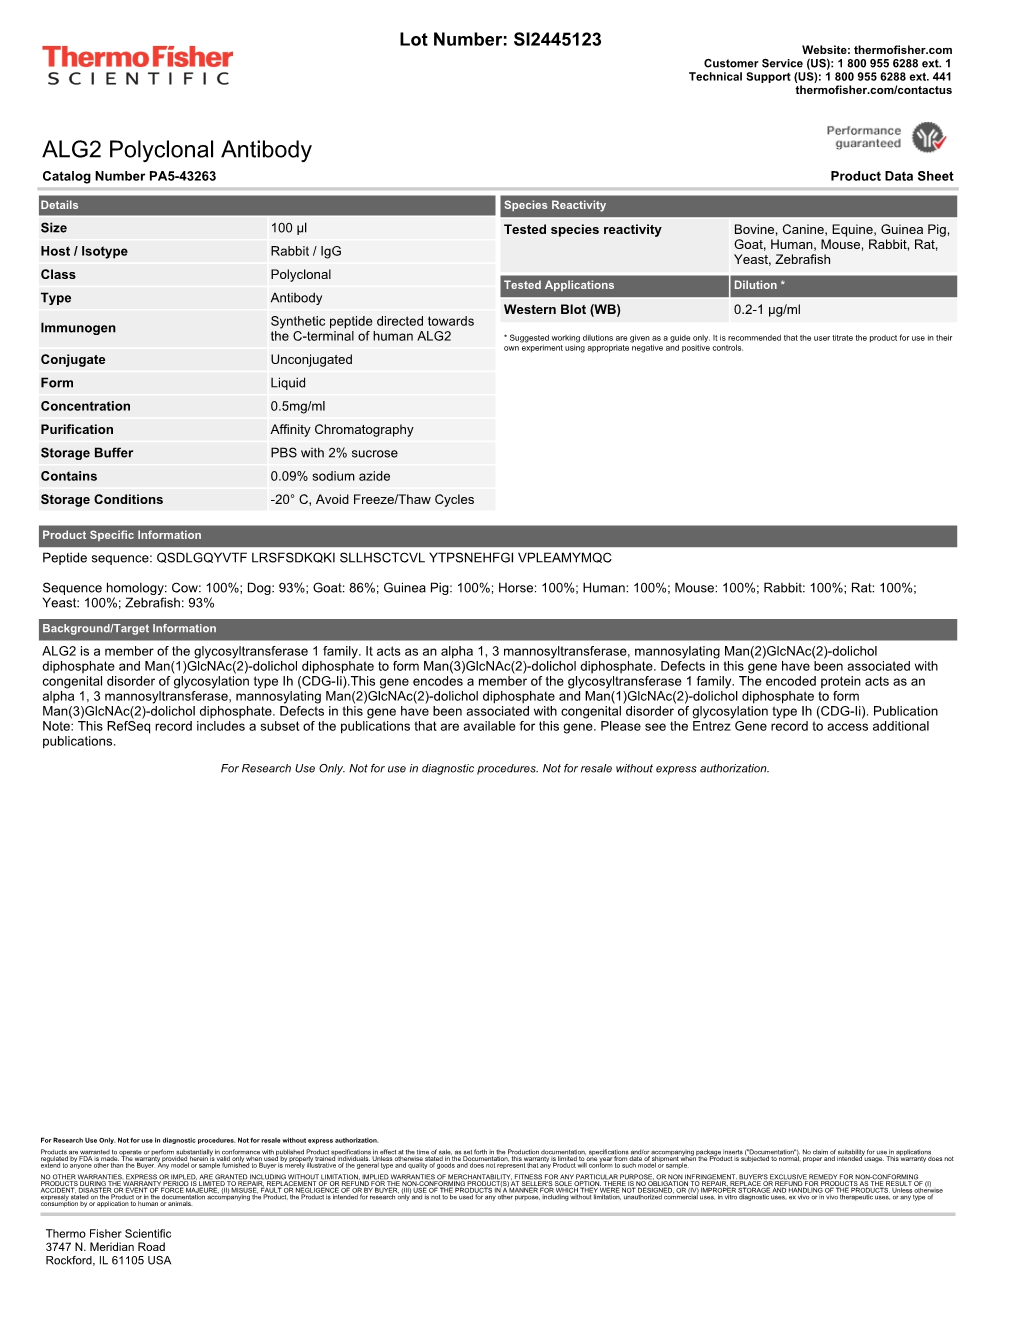 ALG2 Polyclonal Antibody Catalog Number PA5-43263 Product Data Sheet